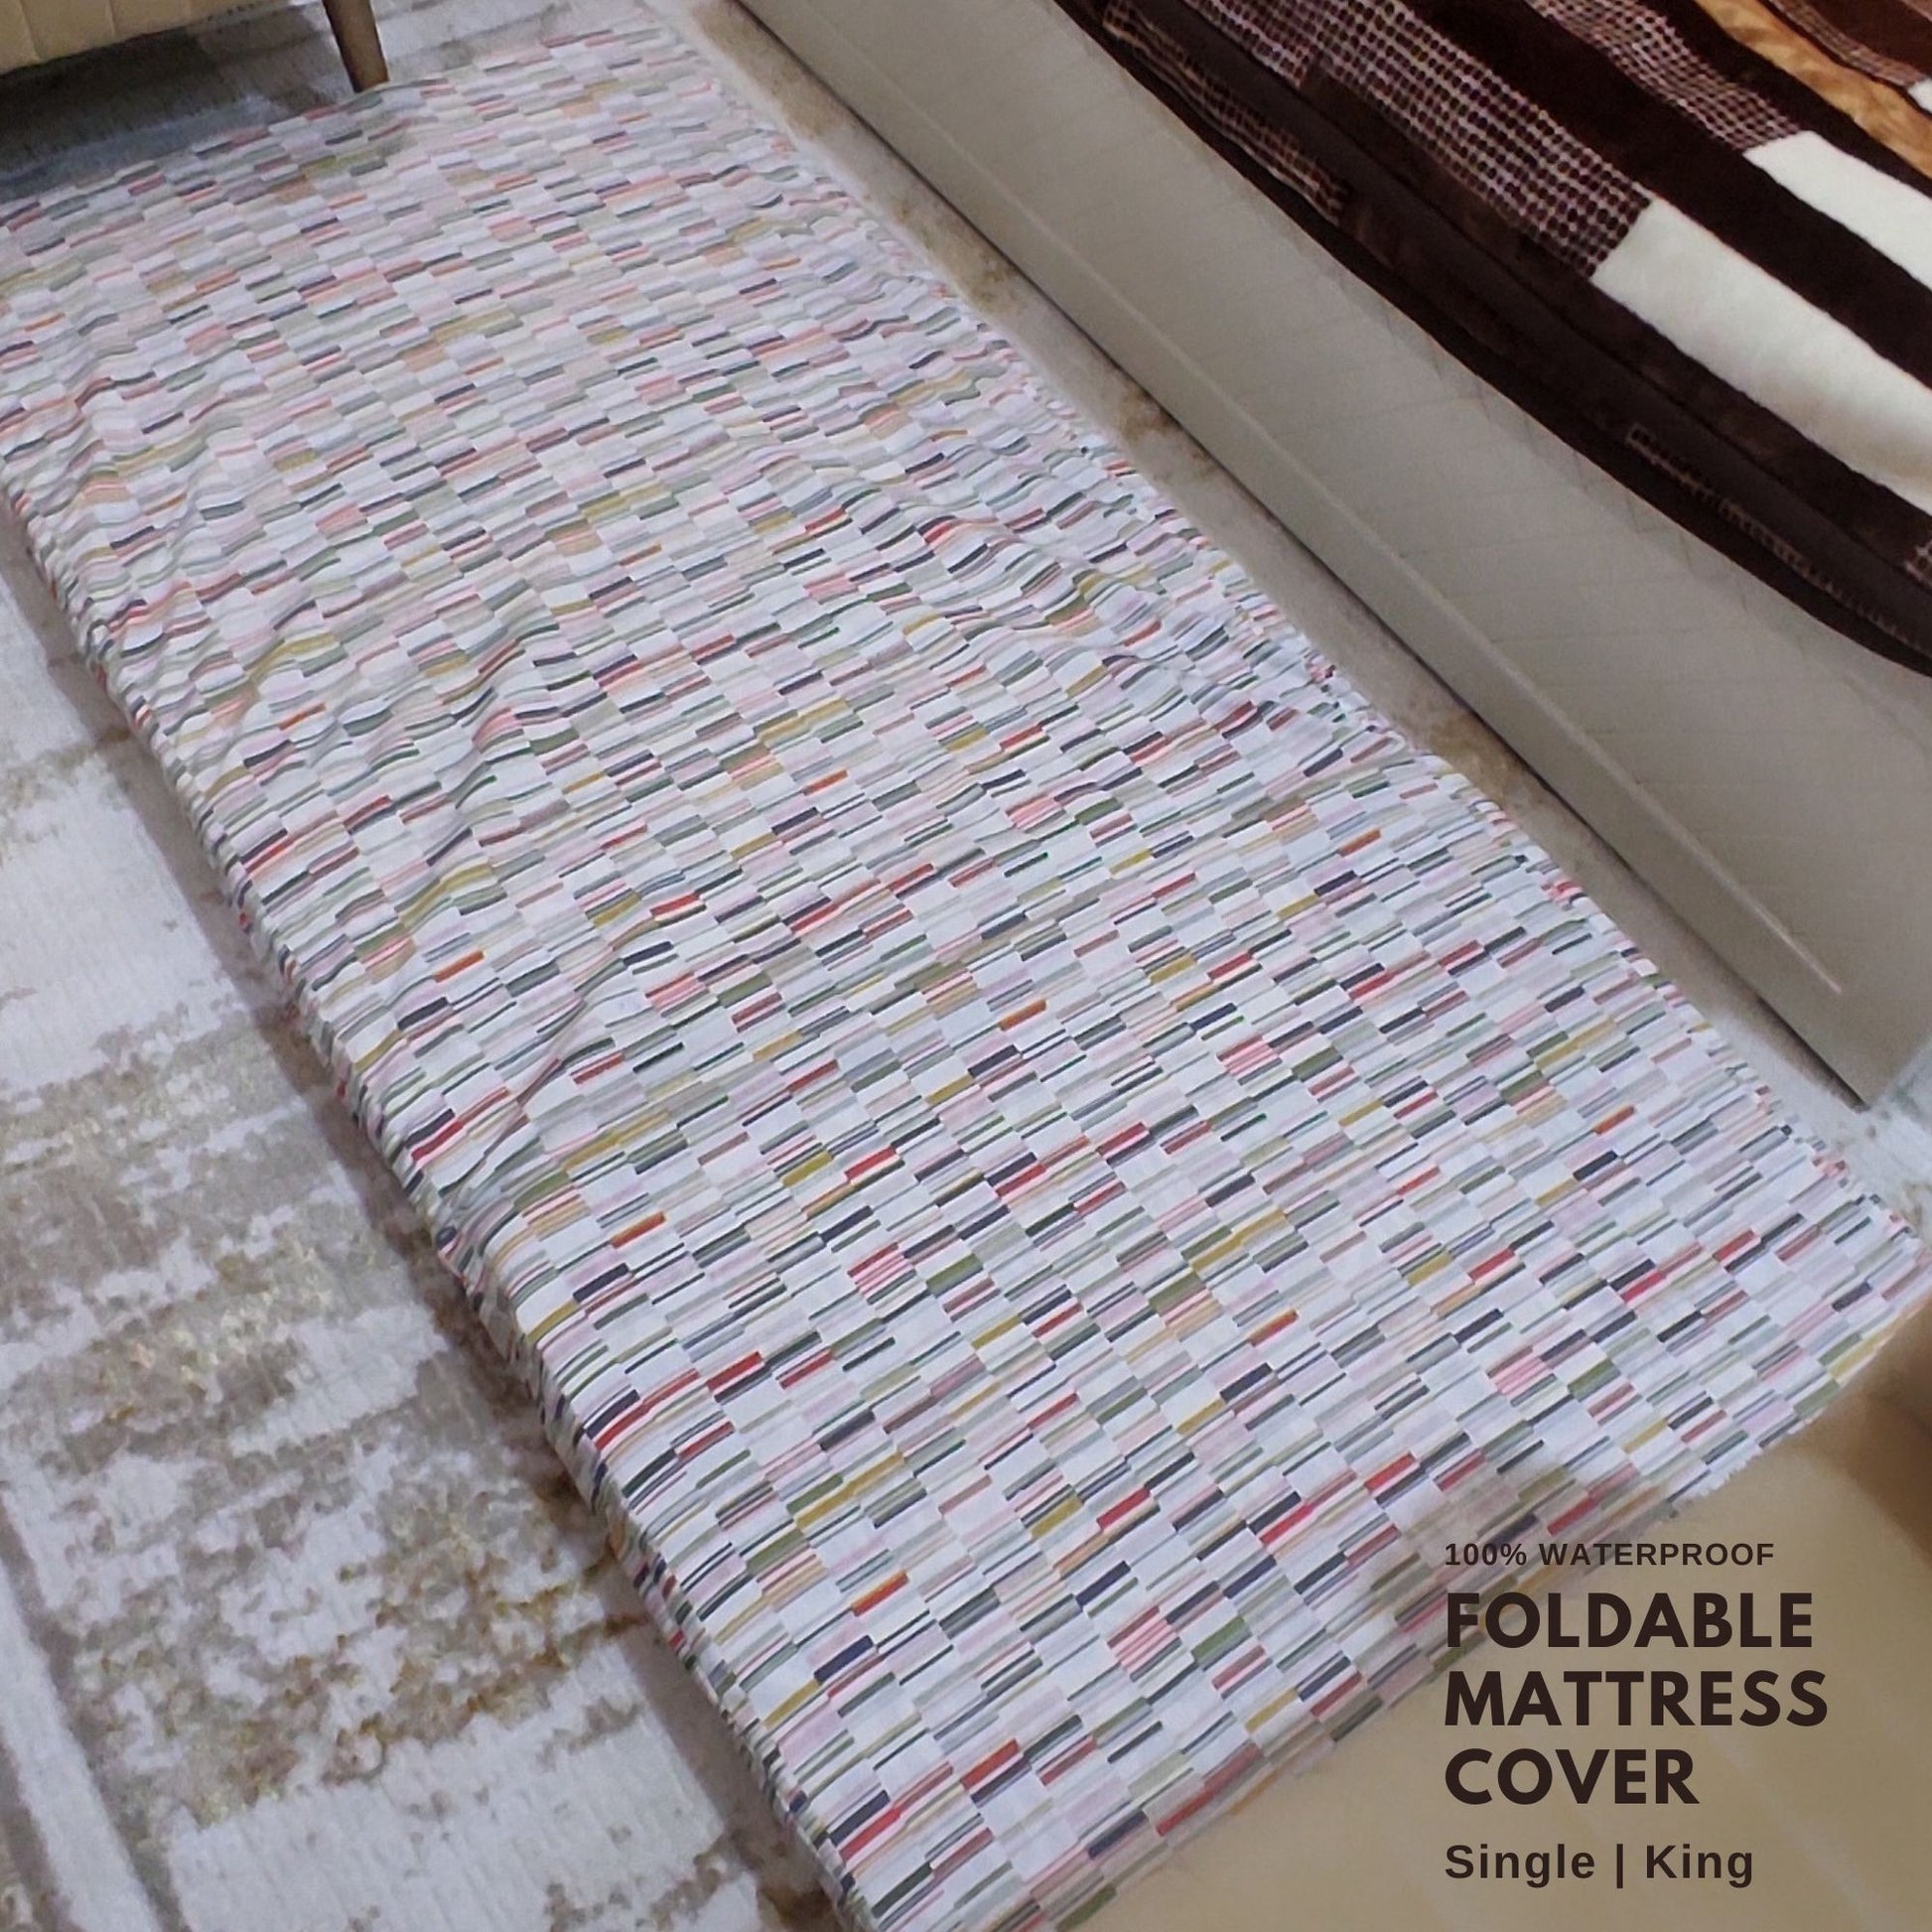 Foldable Waterproof Mattress Cover